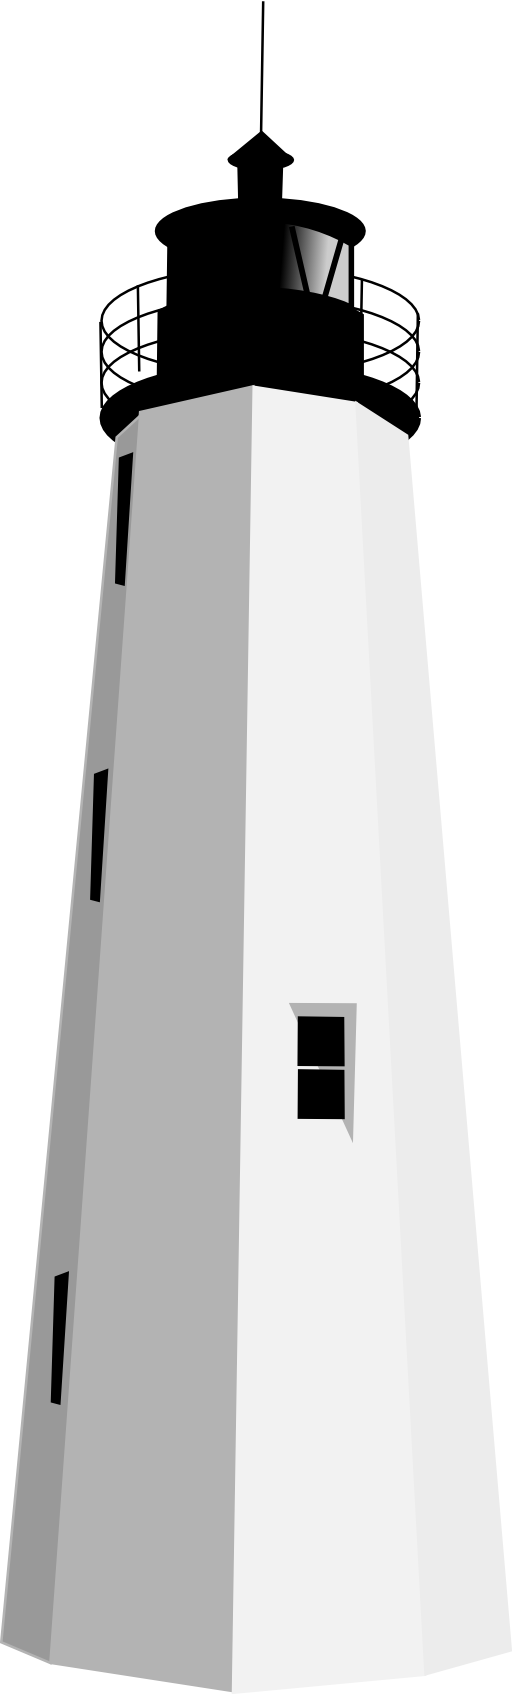 Lighthouse Silhouette Clip Art